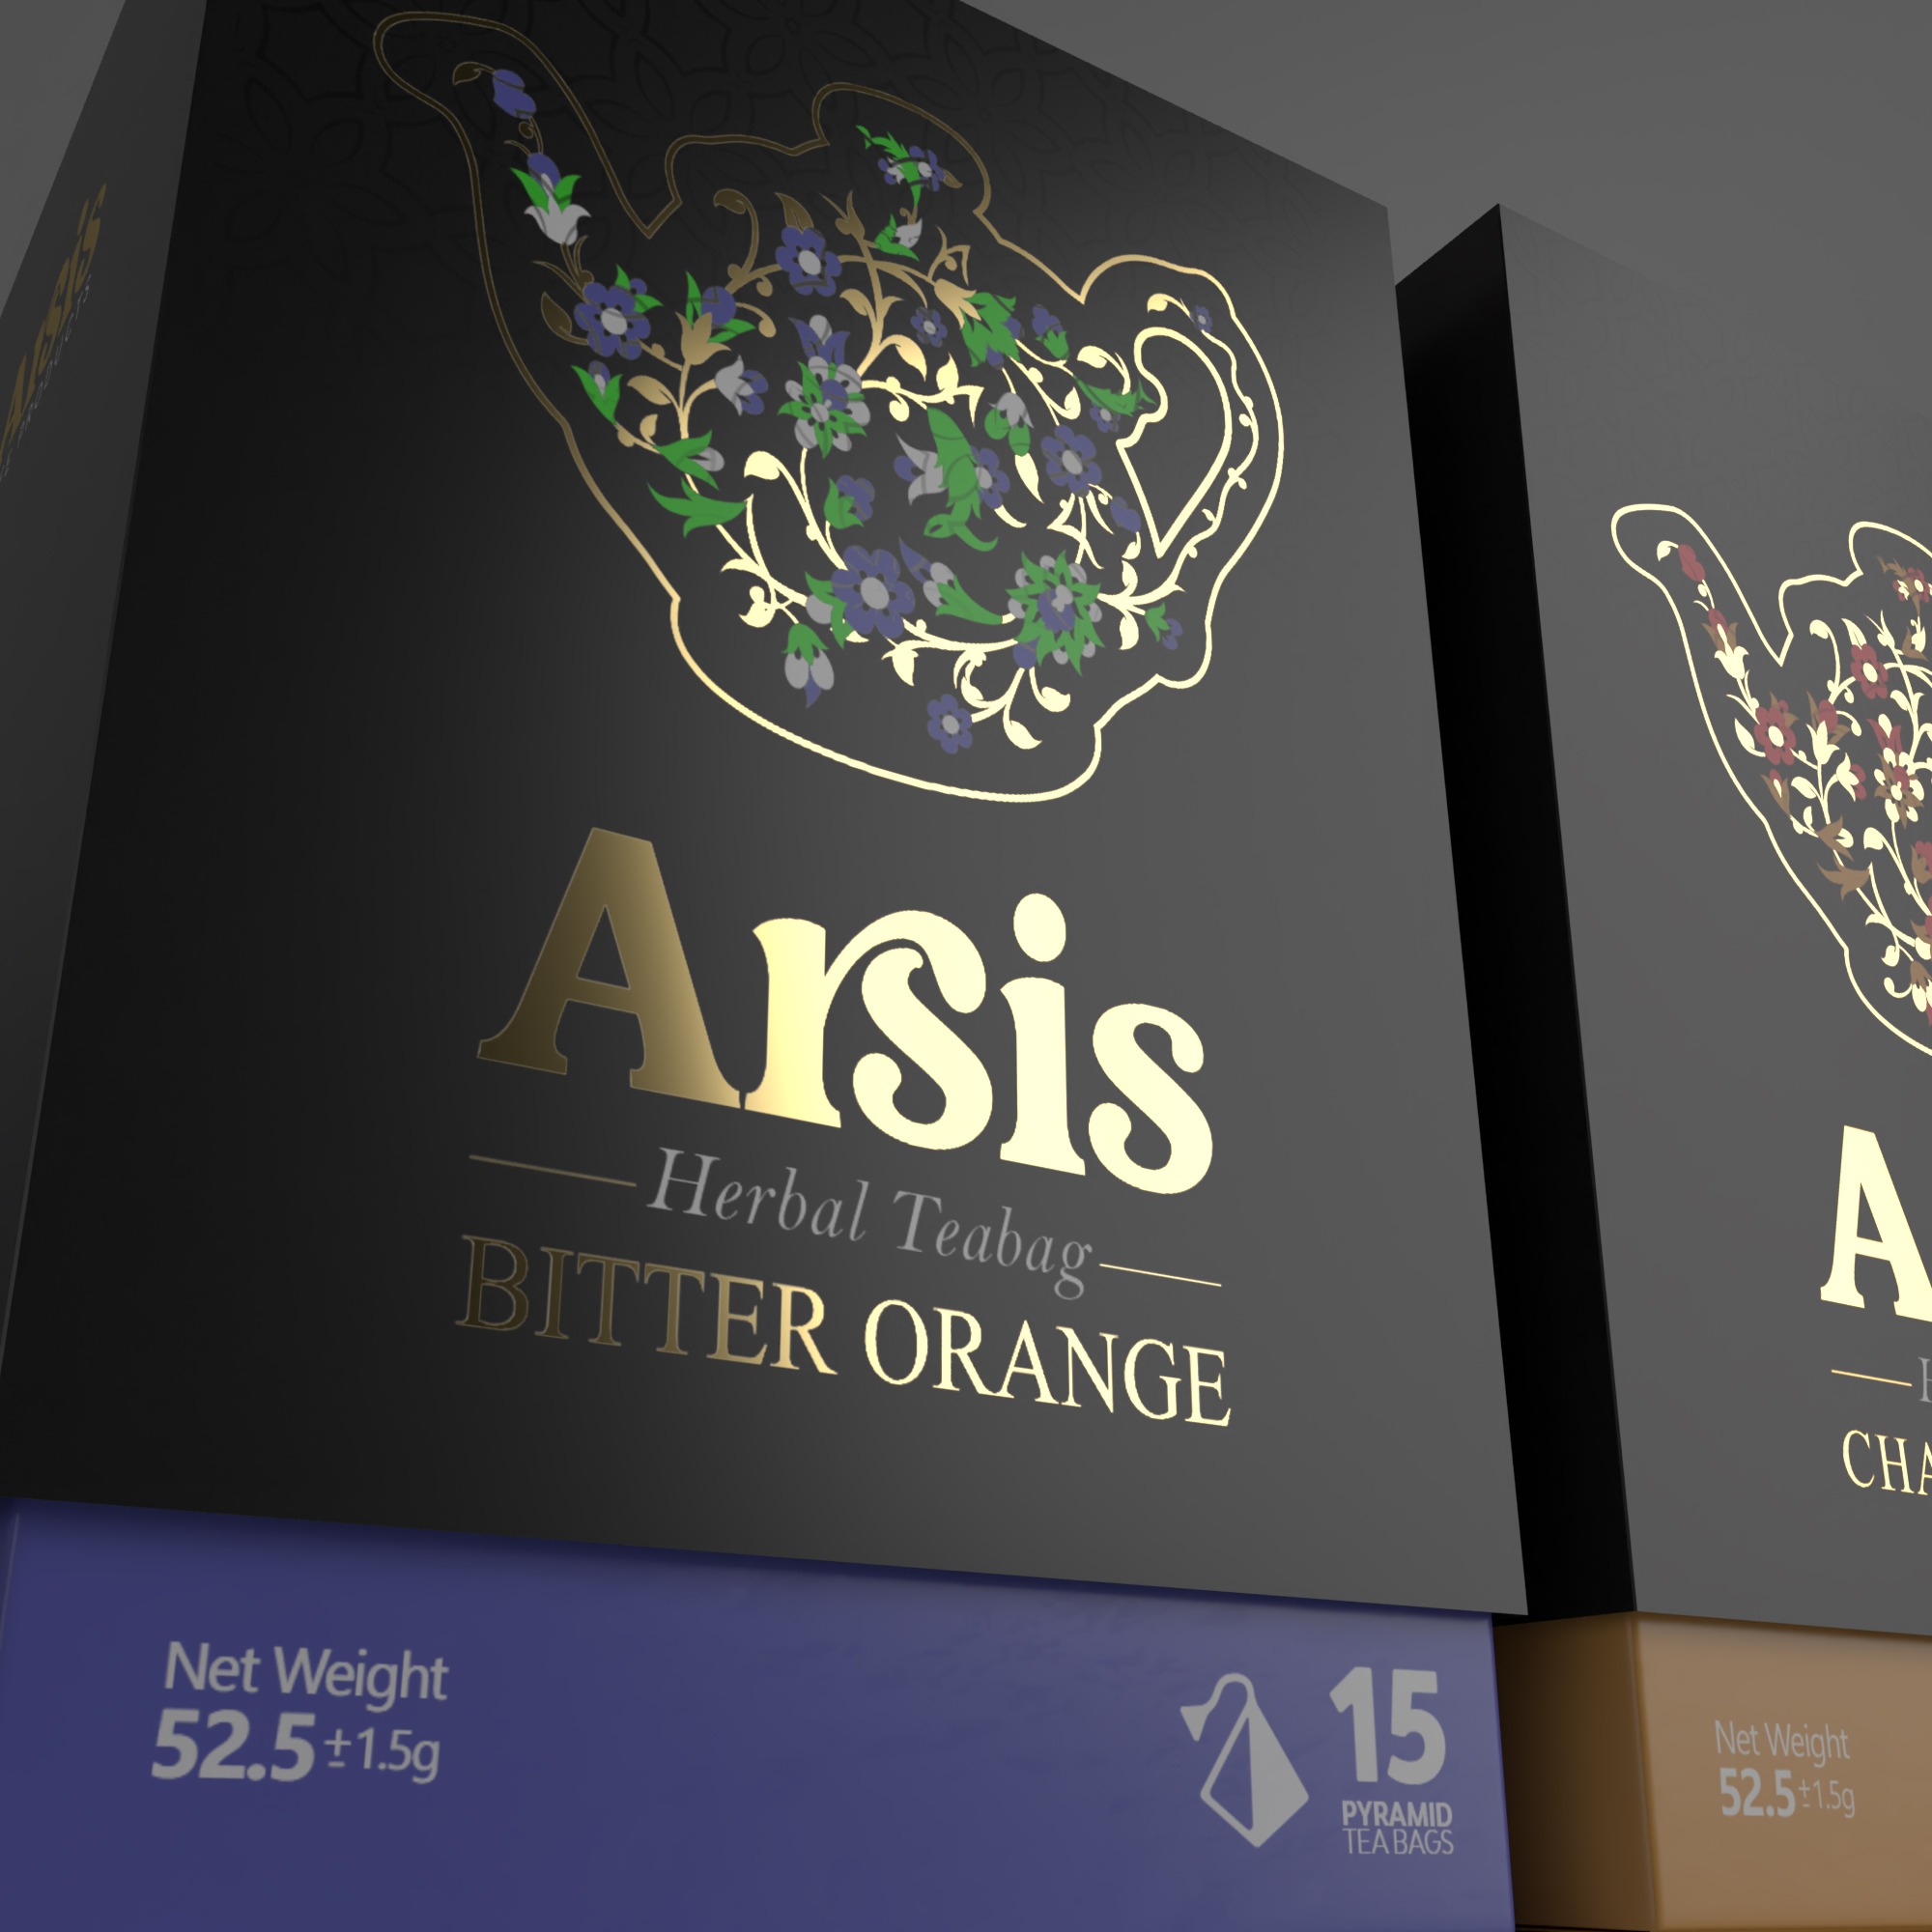 Khoram Graphic Created Iranian Herbal Tea Arsis Packaging Design